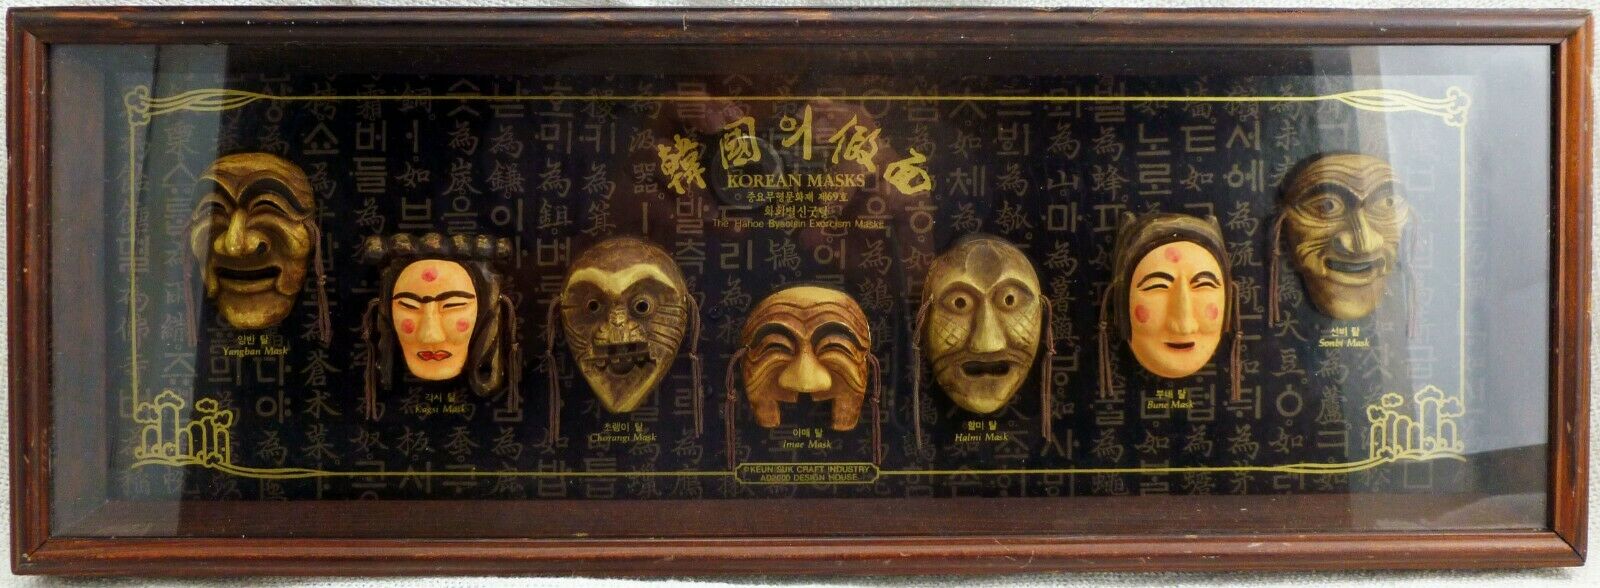 Korean Masks The Hahoe, Byeolisn, Exorcism Masks